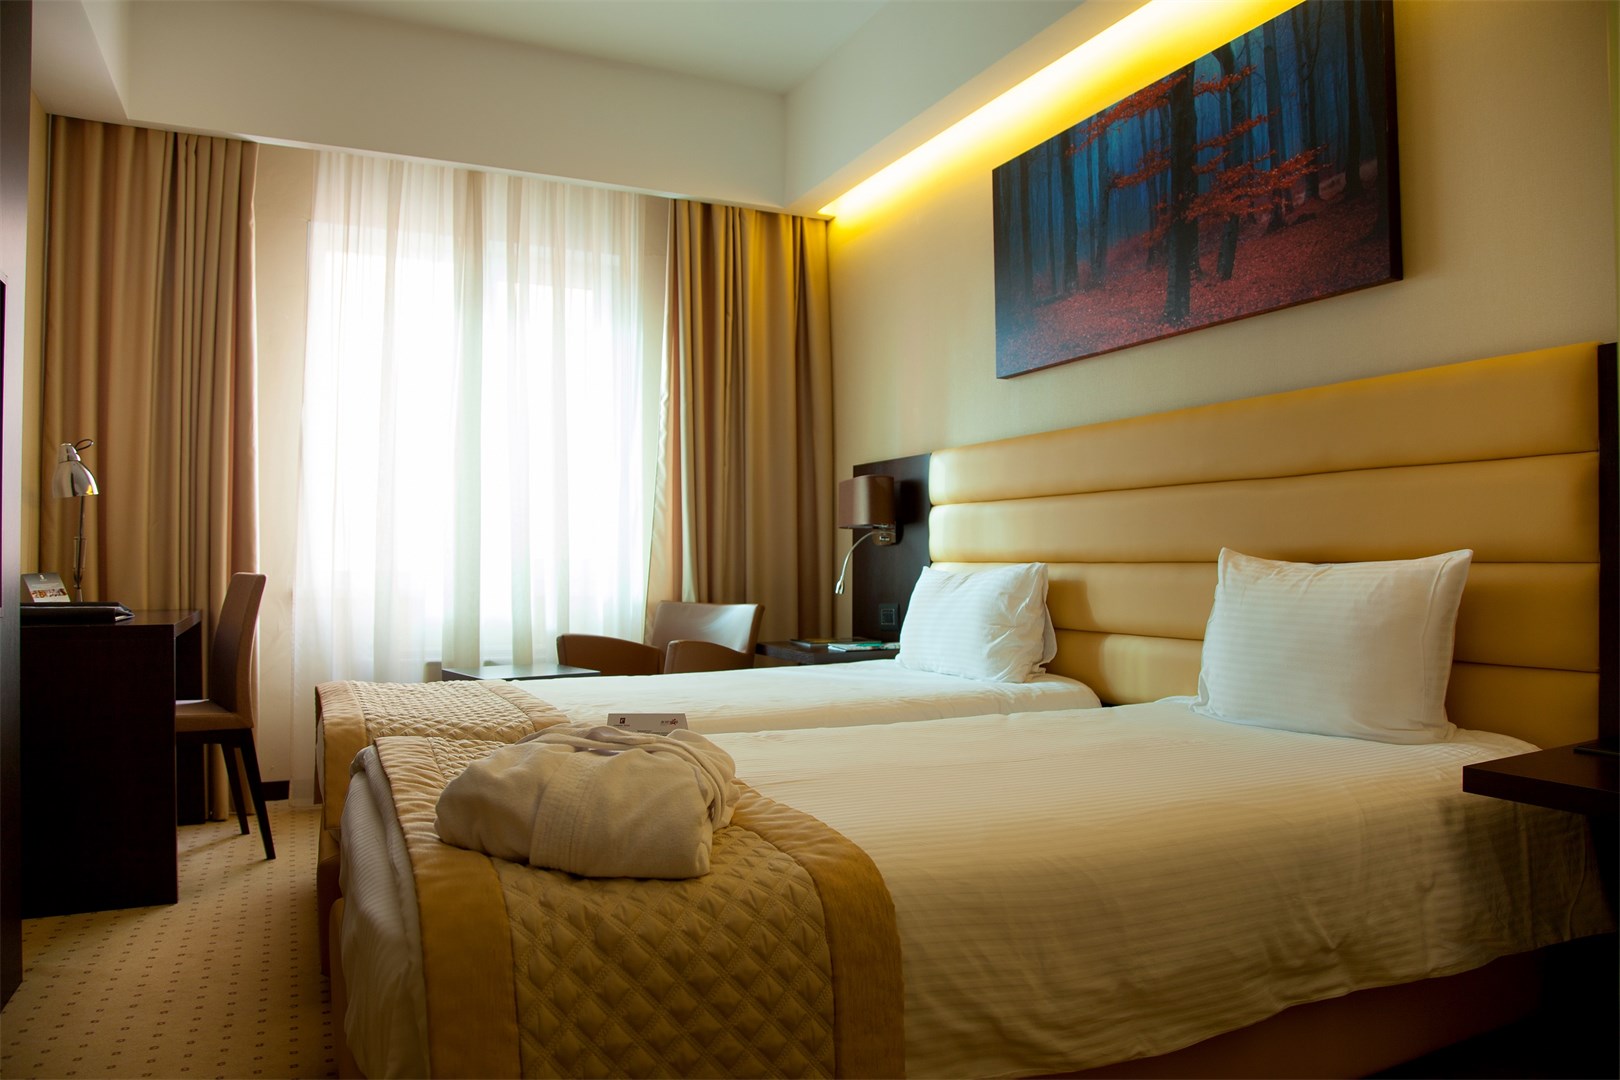 Отели астана сайт. Астана отель комфорт. Comfort Hotel Astana фото. Отель Monaco Astana. Комфорт в гостинице.